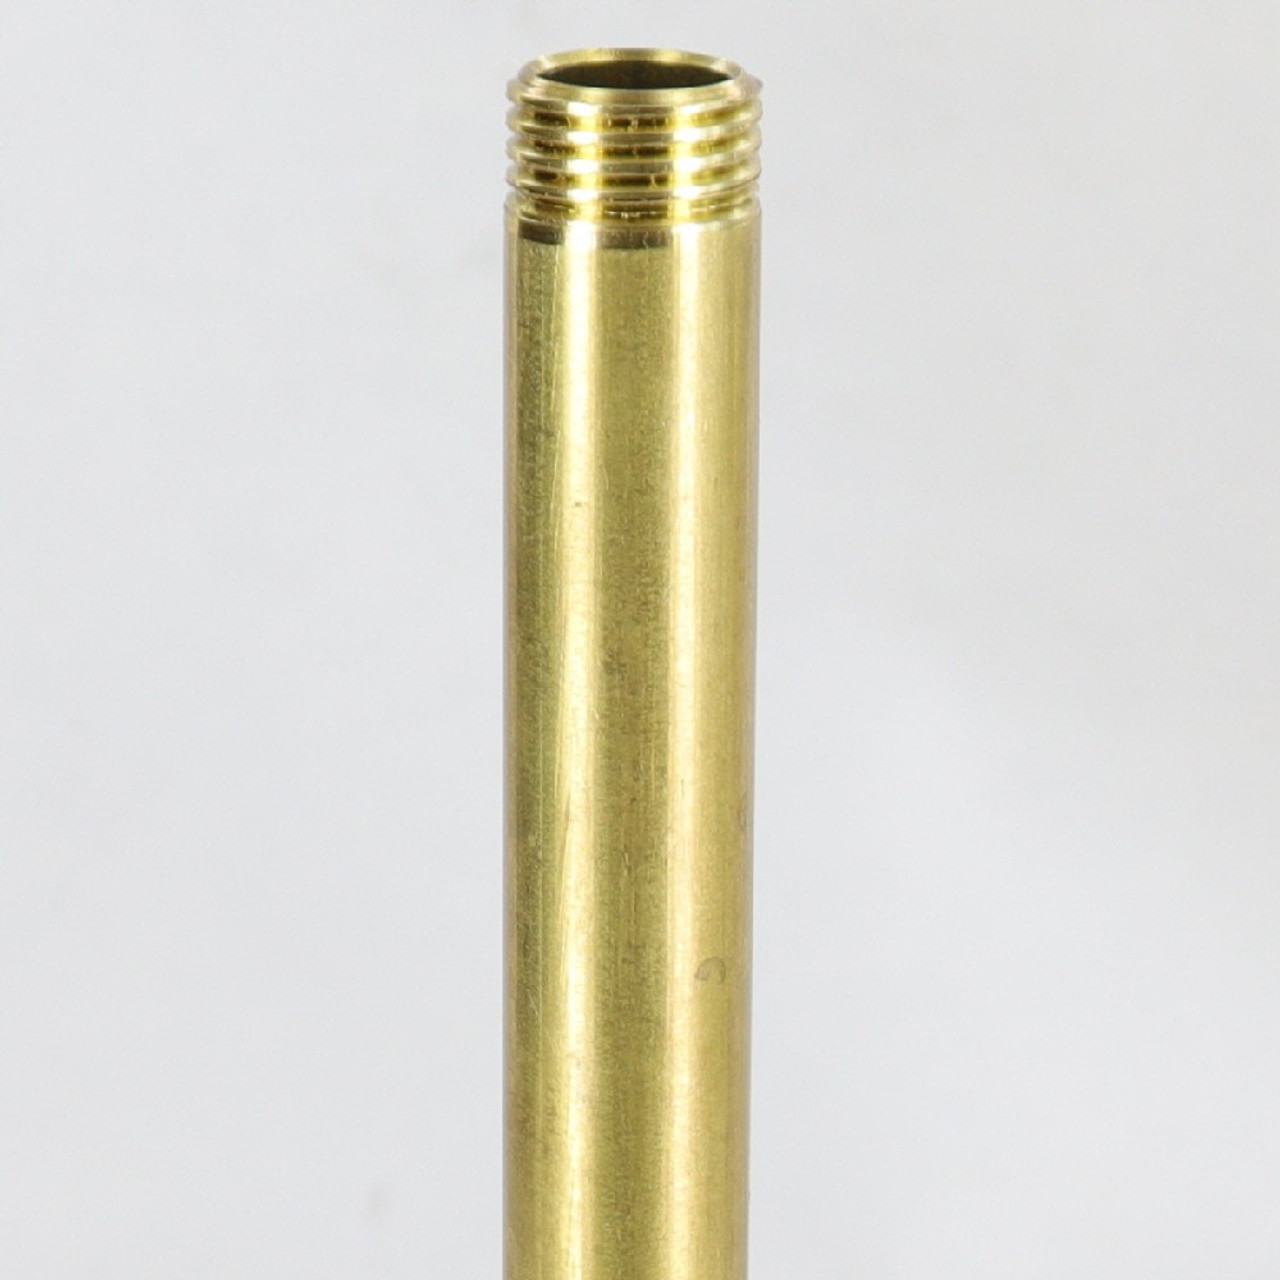 Threaded Brass Tubing - 1-1/4 x 6 - Master Plumber®